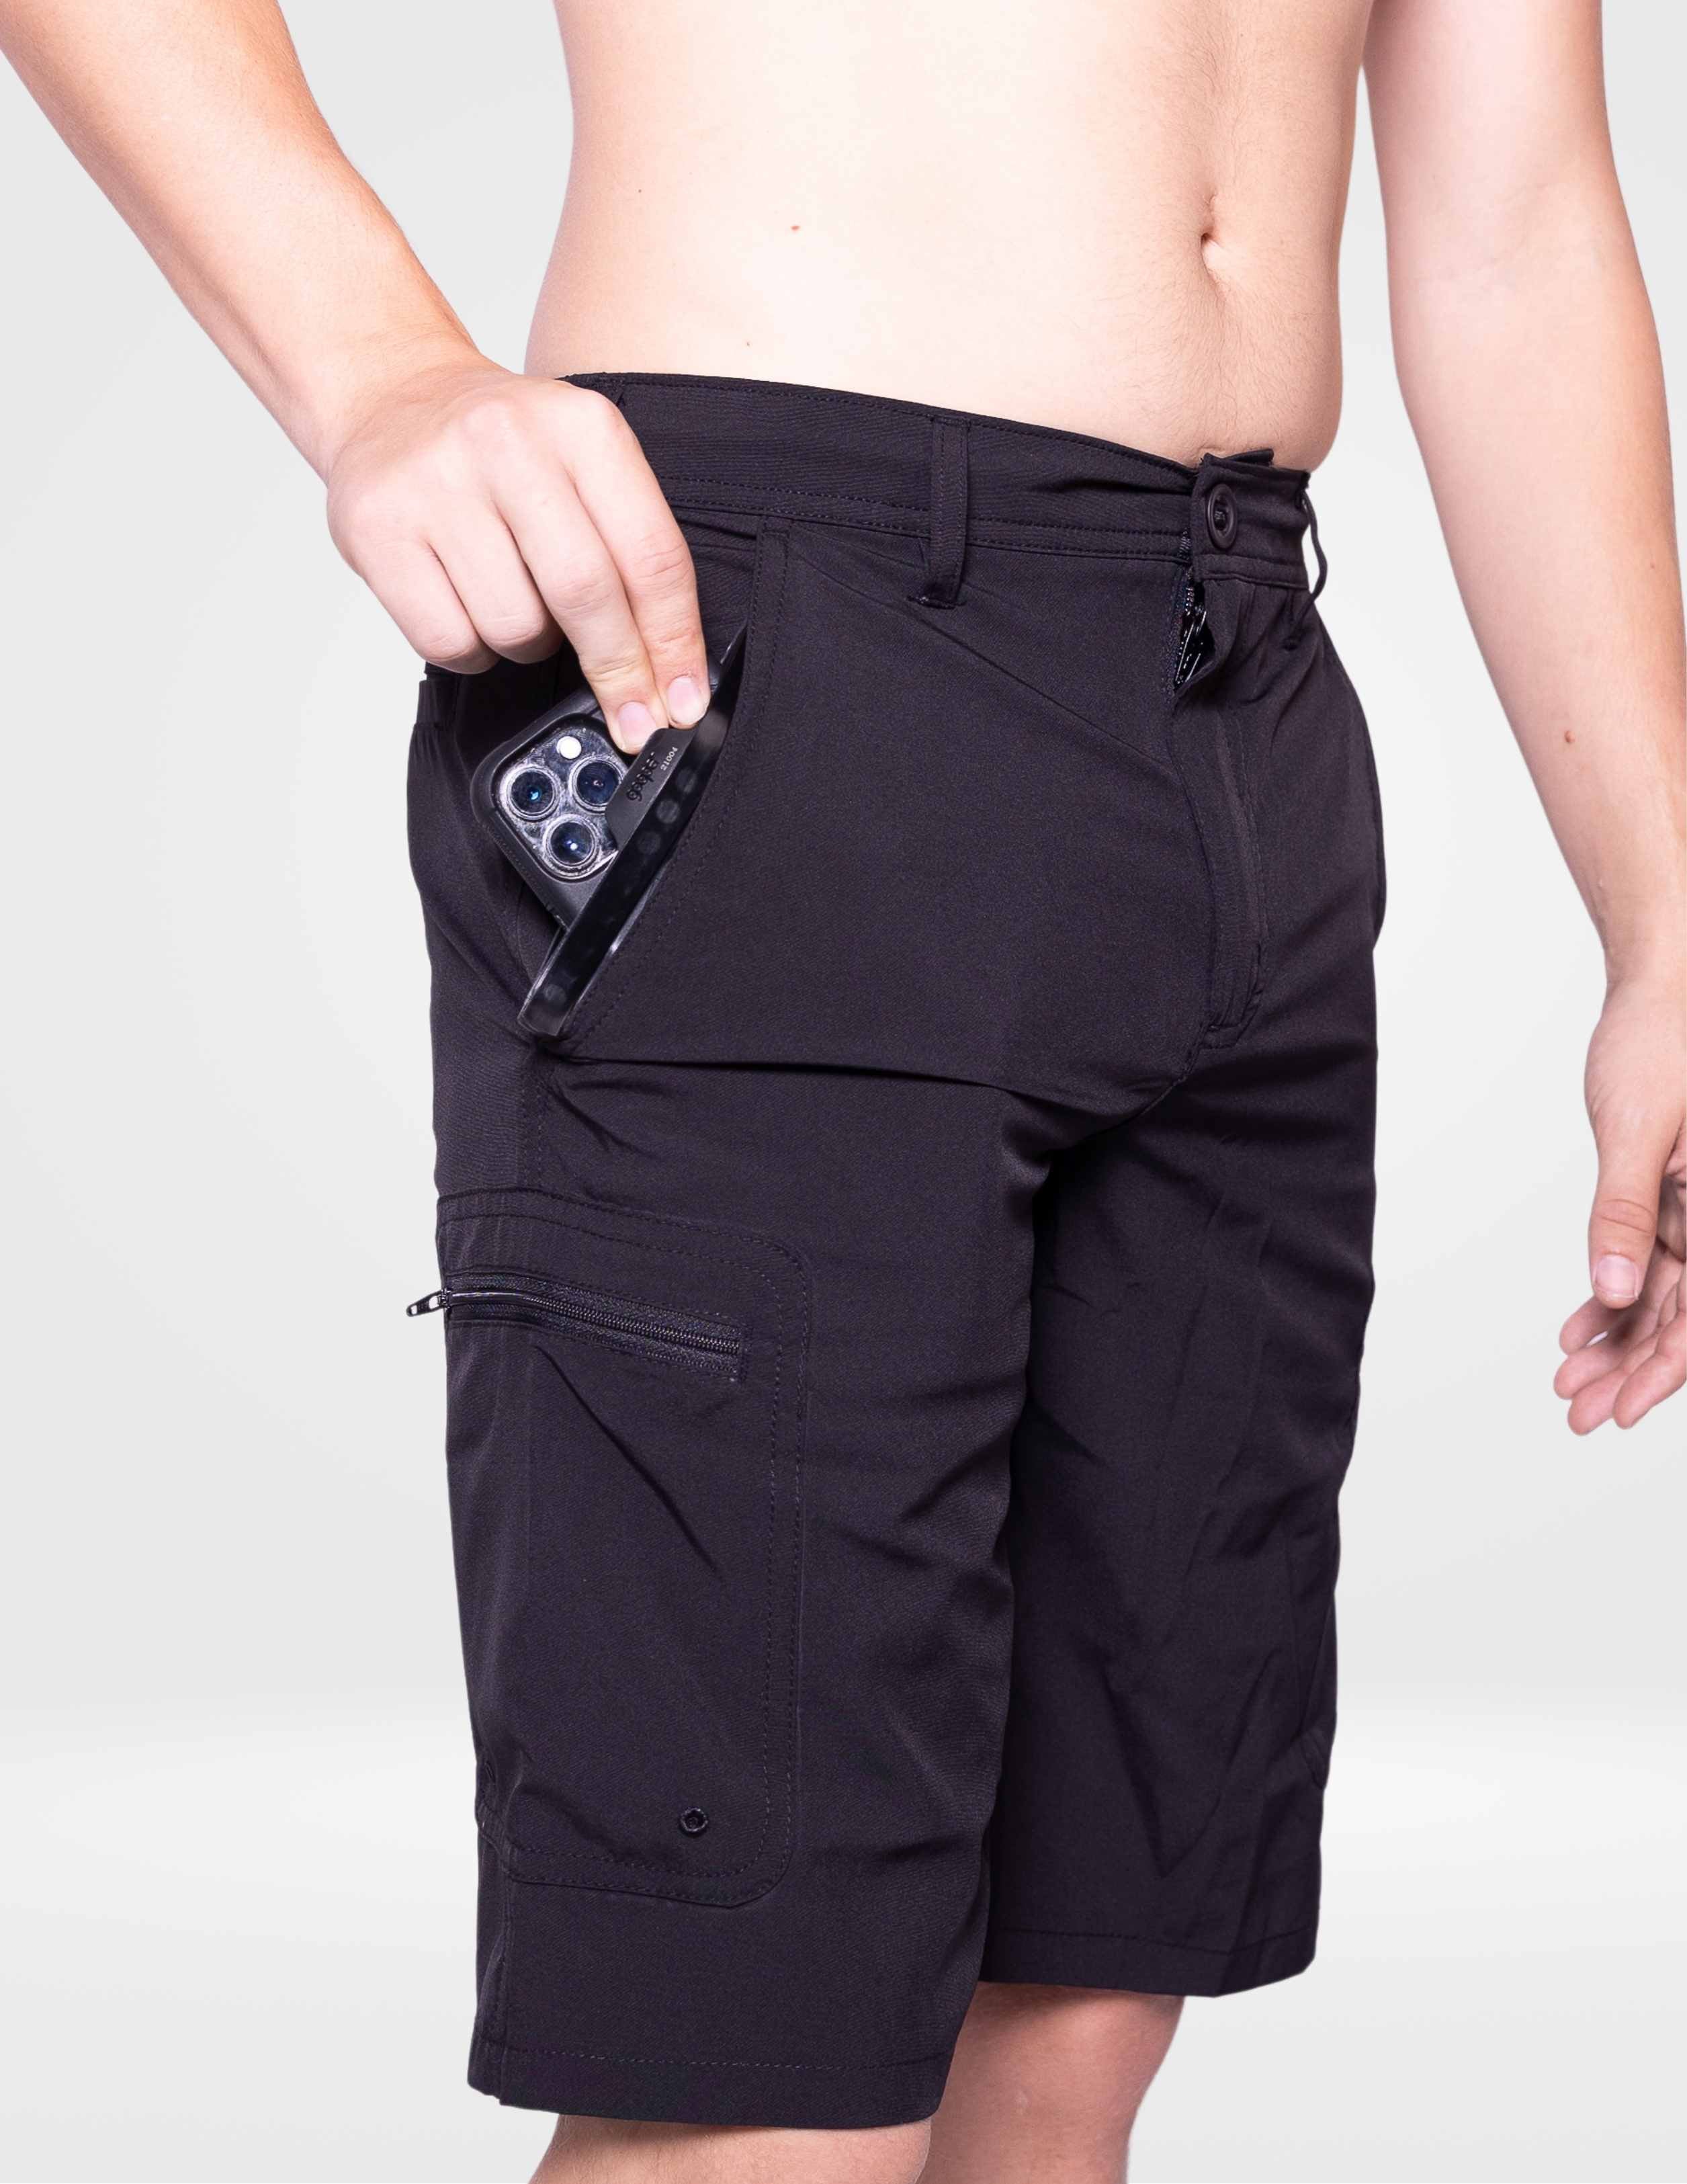 Waterproof Hybrid Shorts With Waterproof Pocket – Dry Pocket Apparel